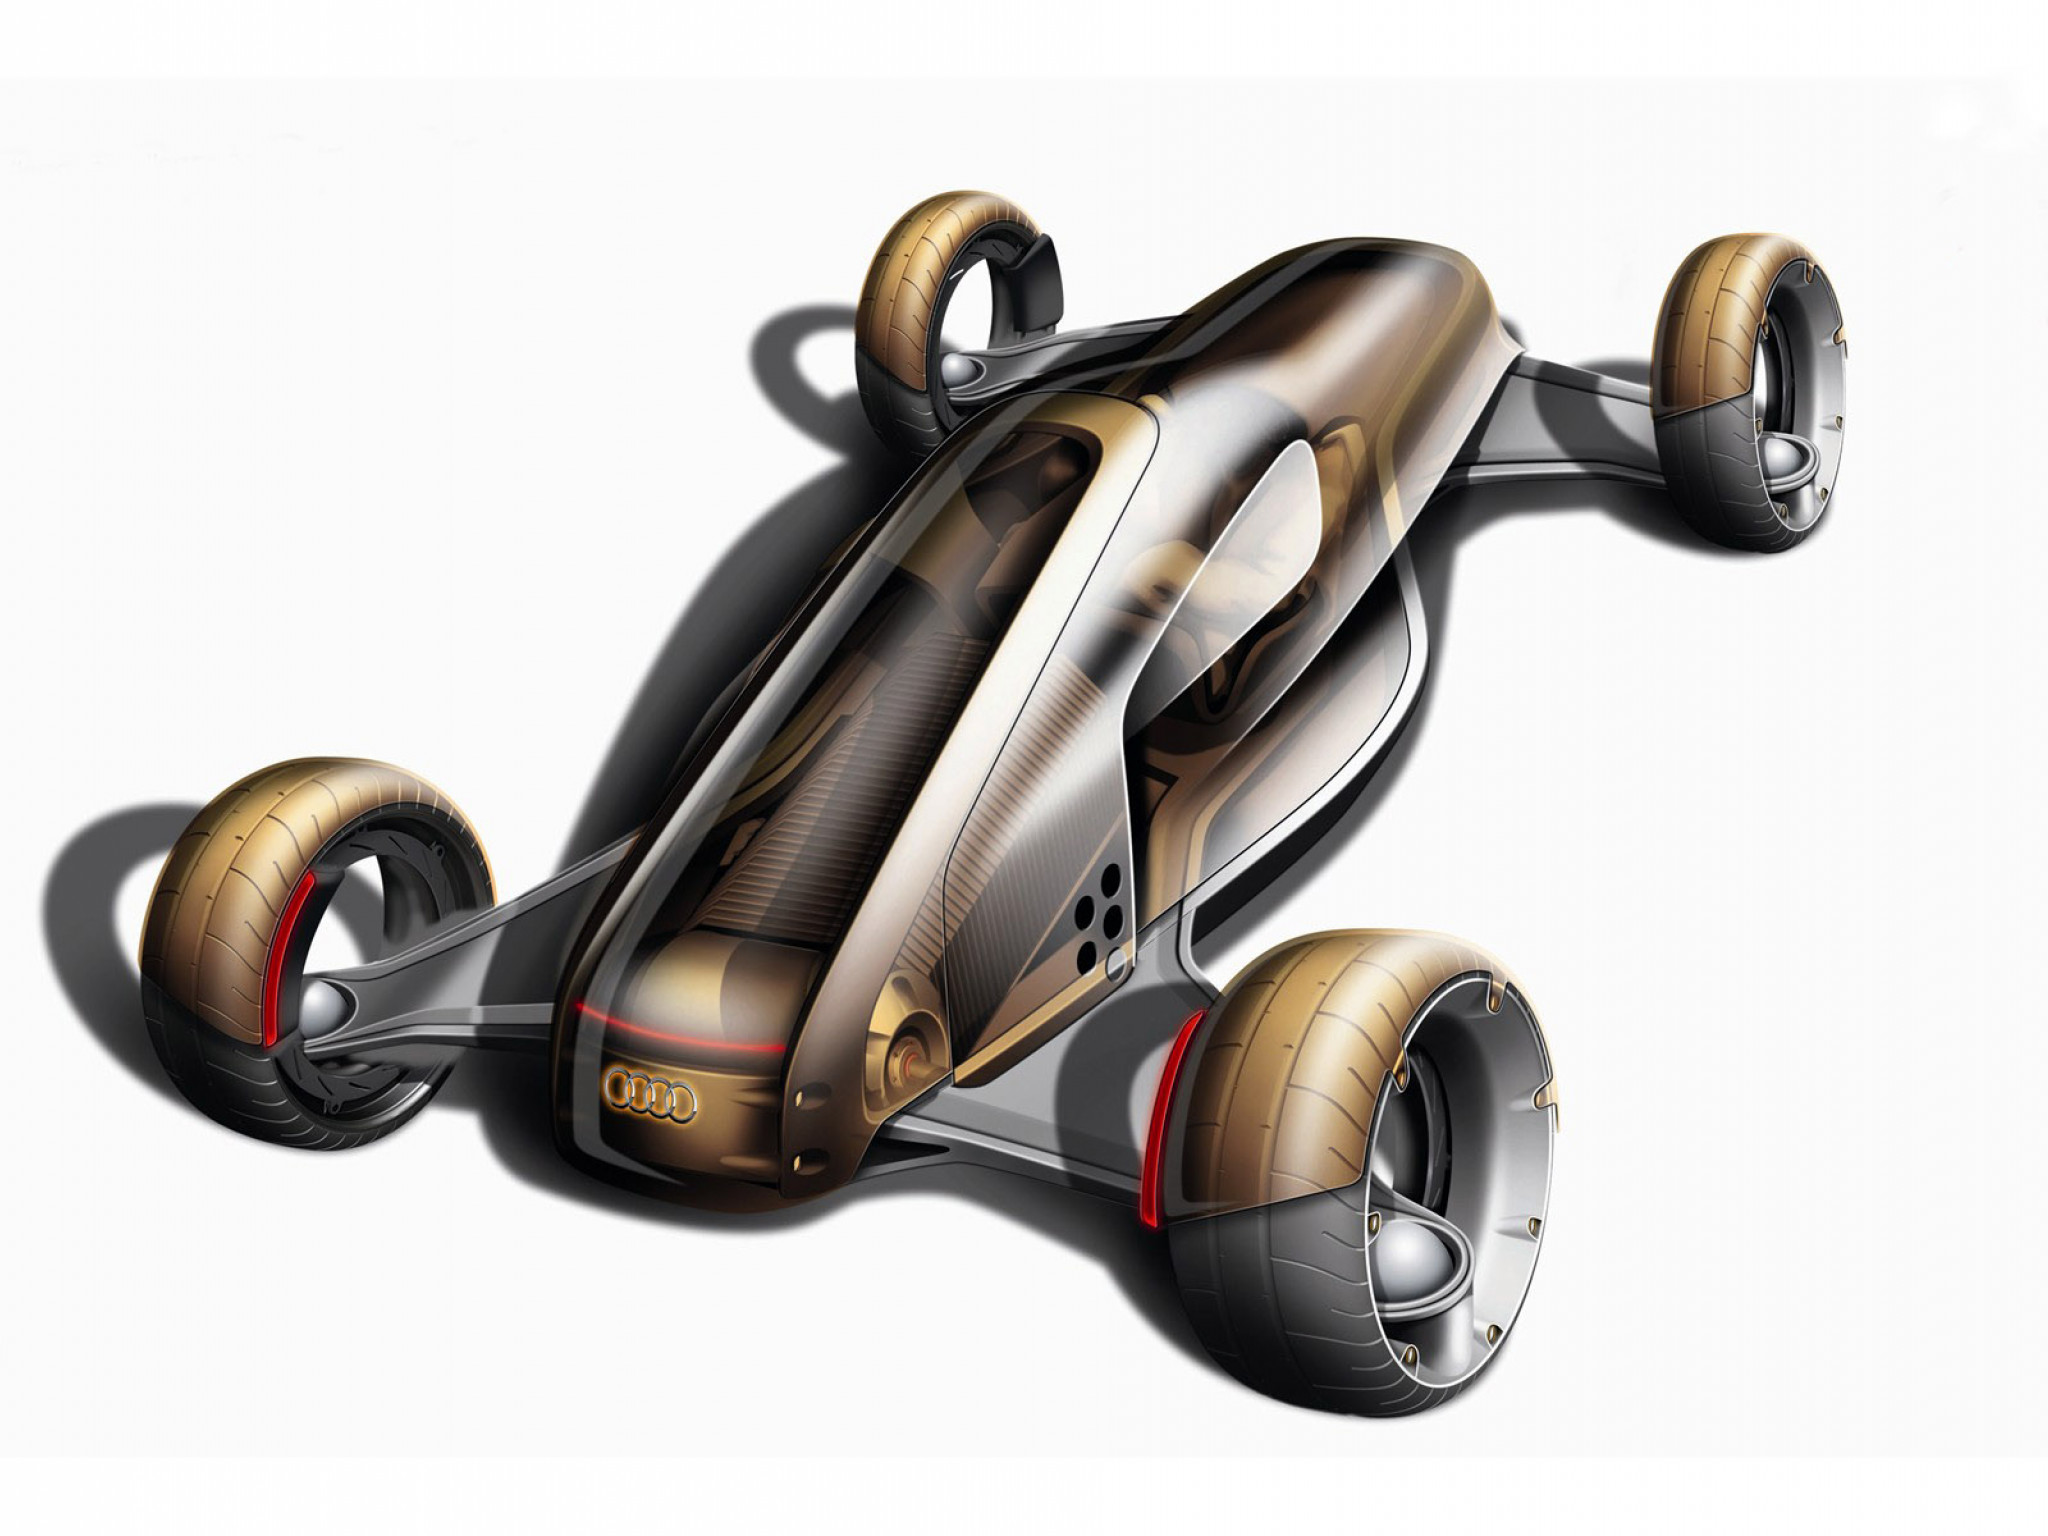 Concept Cars Audi (1).jpg